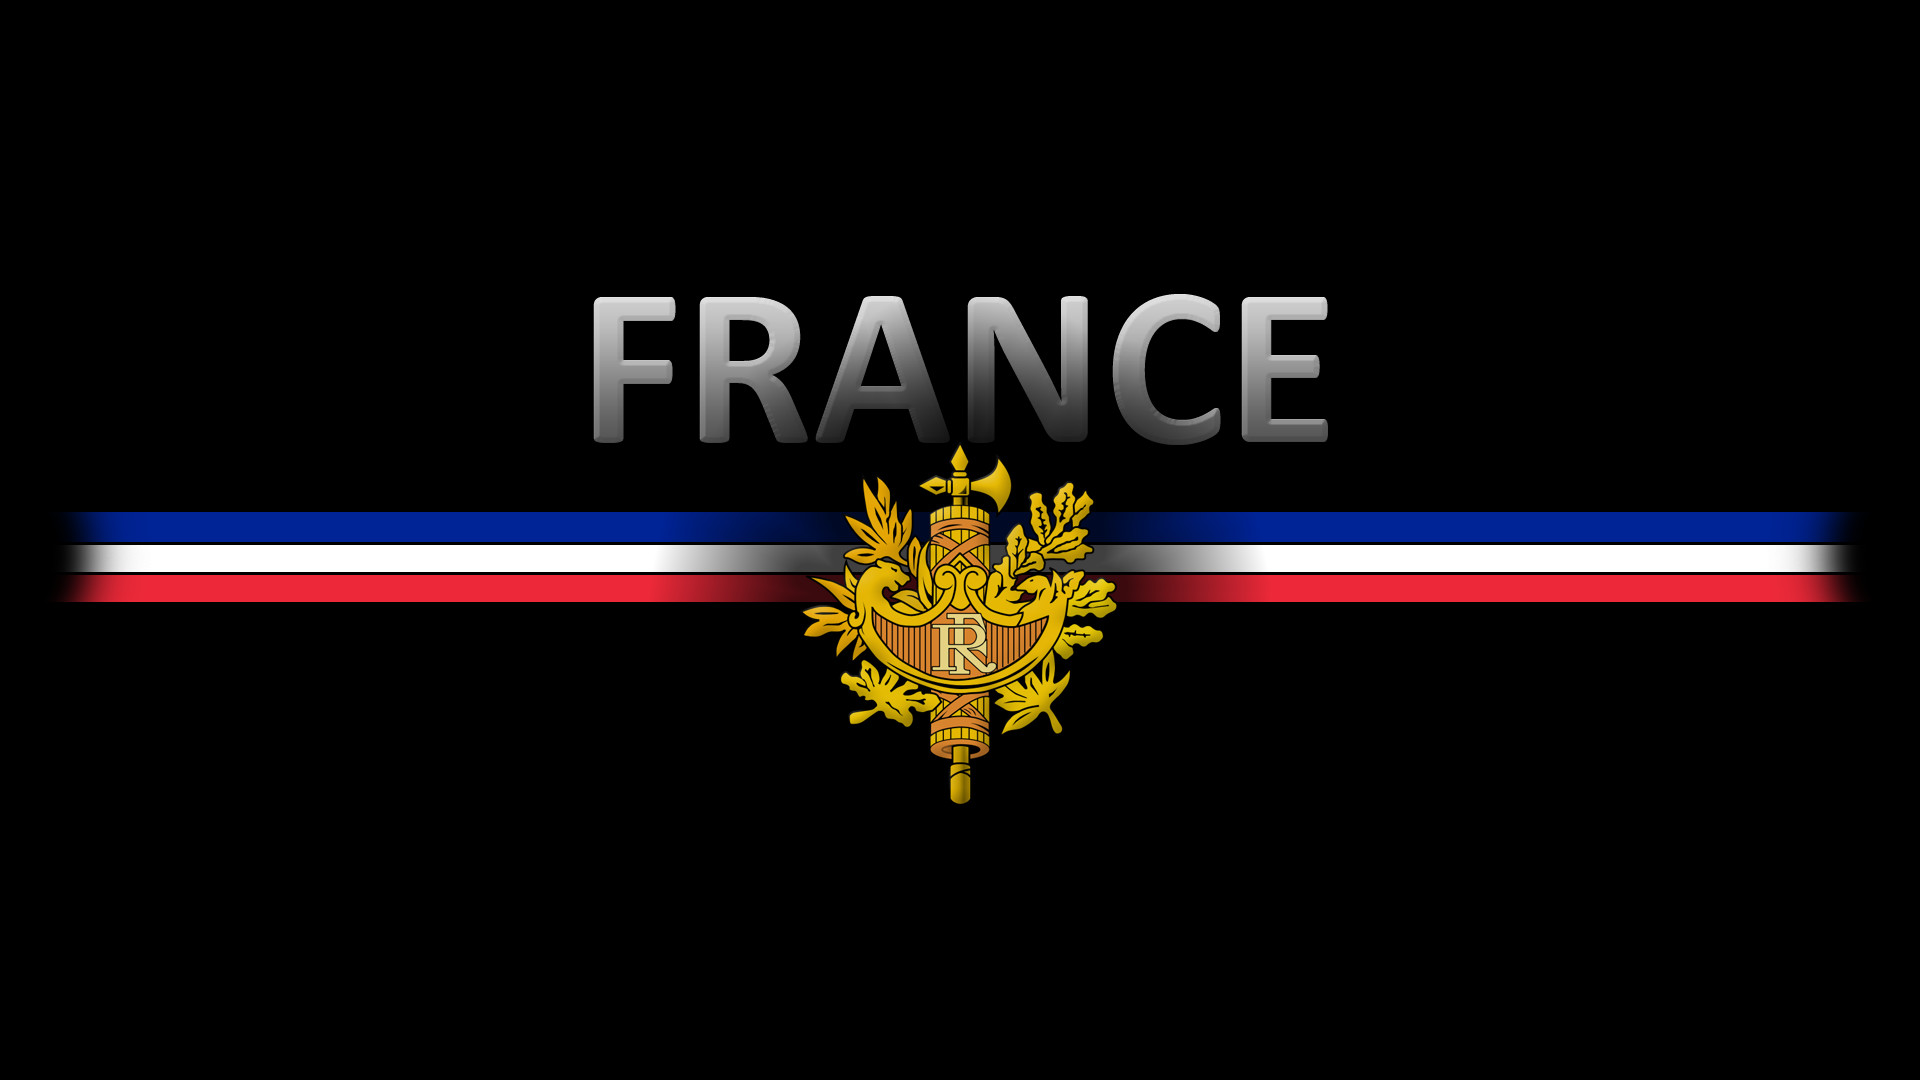 1920x1080 France Wallpaper, Hd Wallpaper, France Flag, Coat Of Arms, Desktop, French